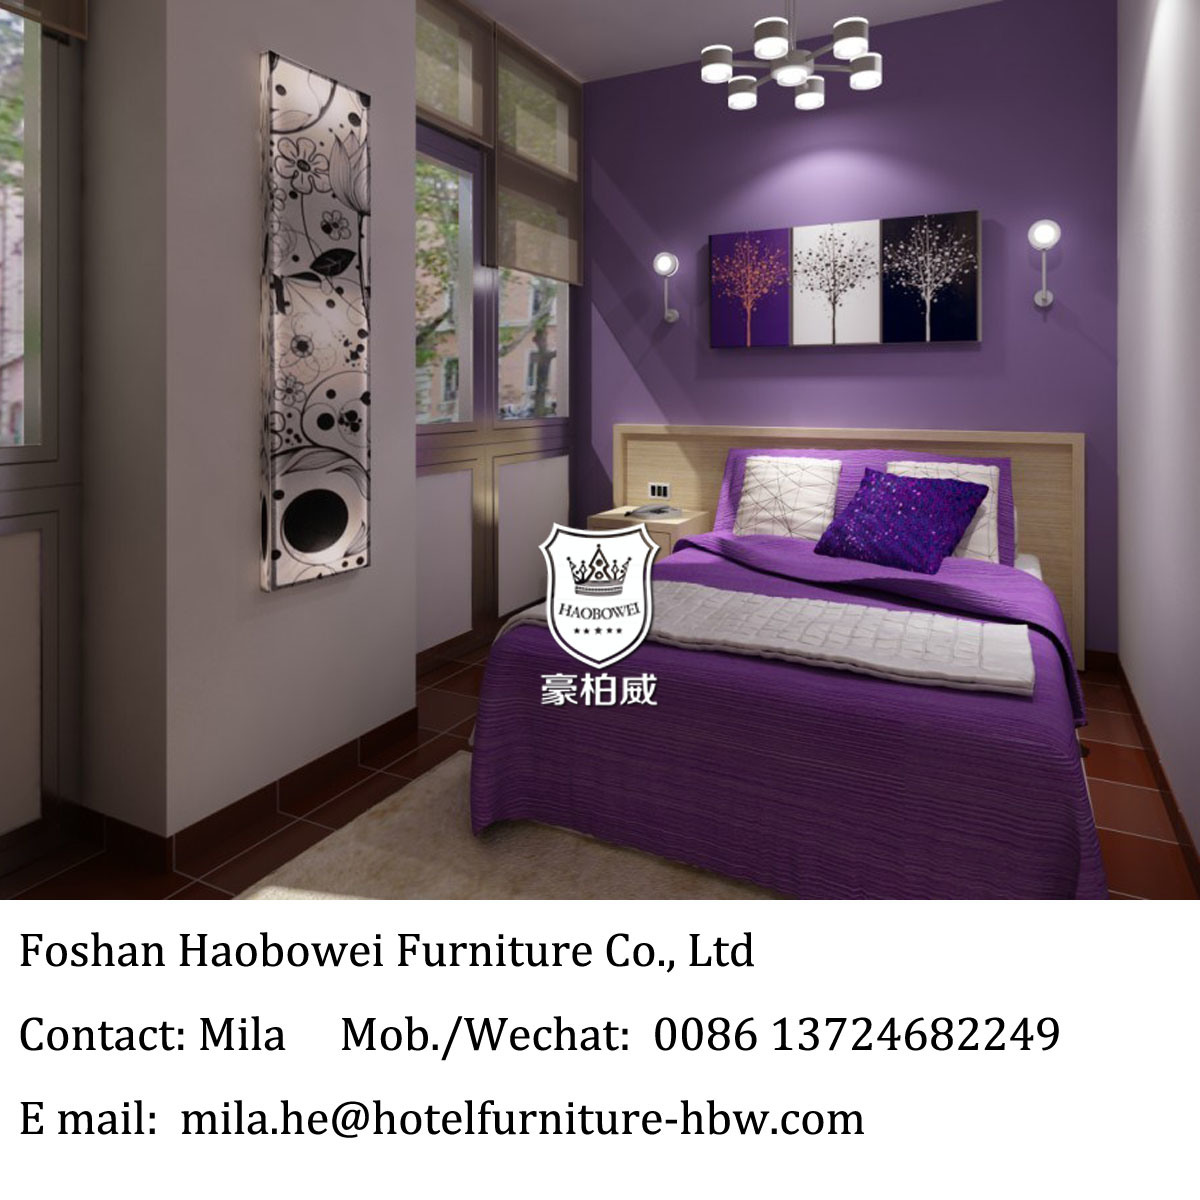 Budget Hotel Bedroom Furniture in Light Oak Melamine Finish for Business Hotels in Low Price